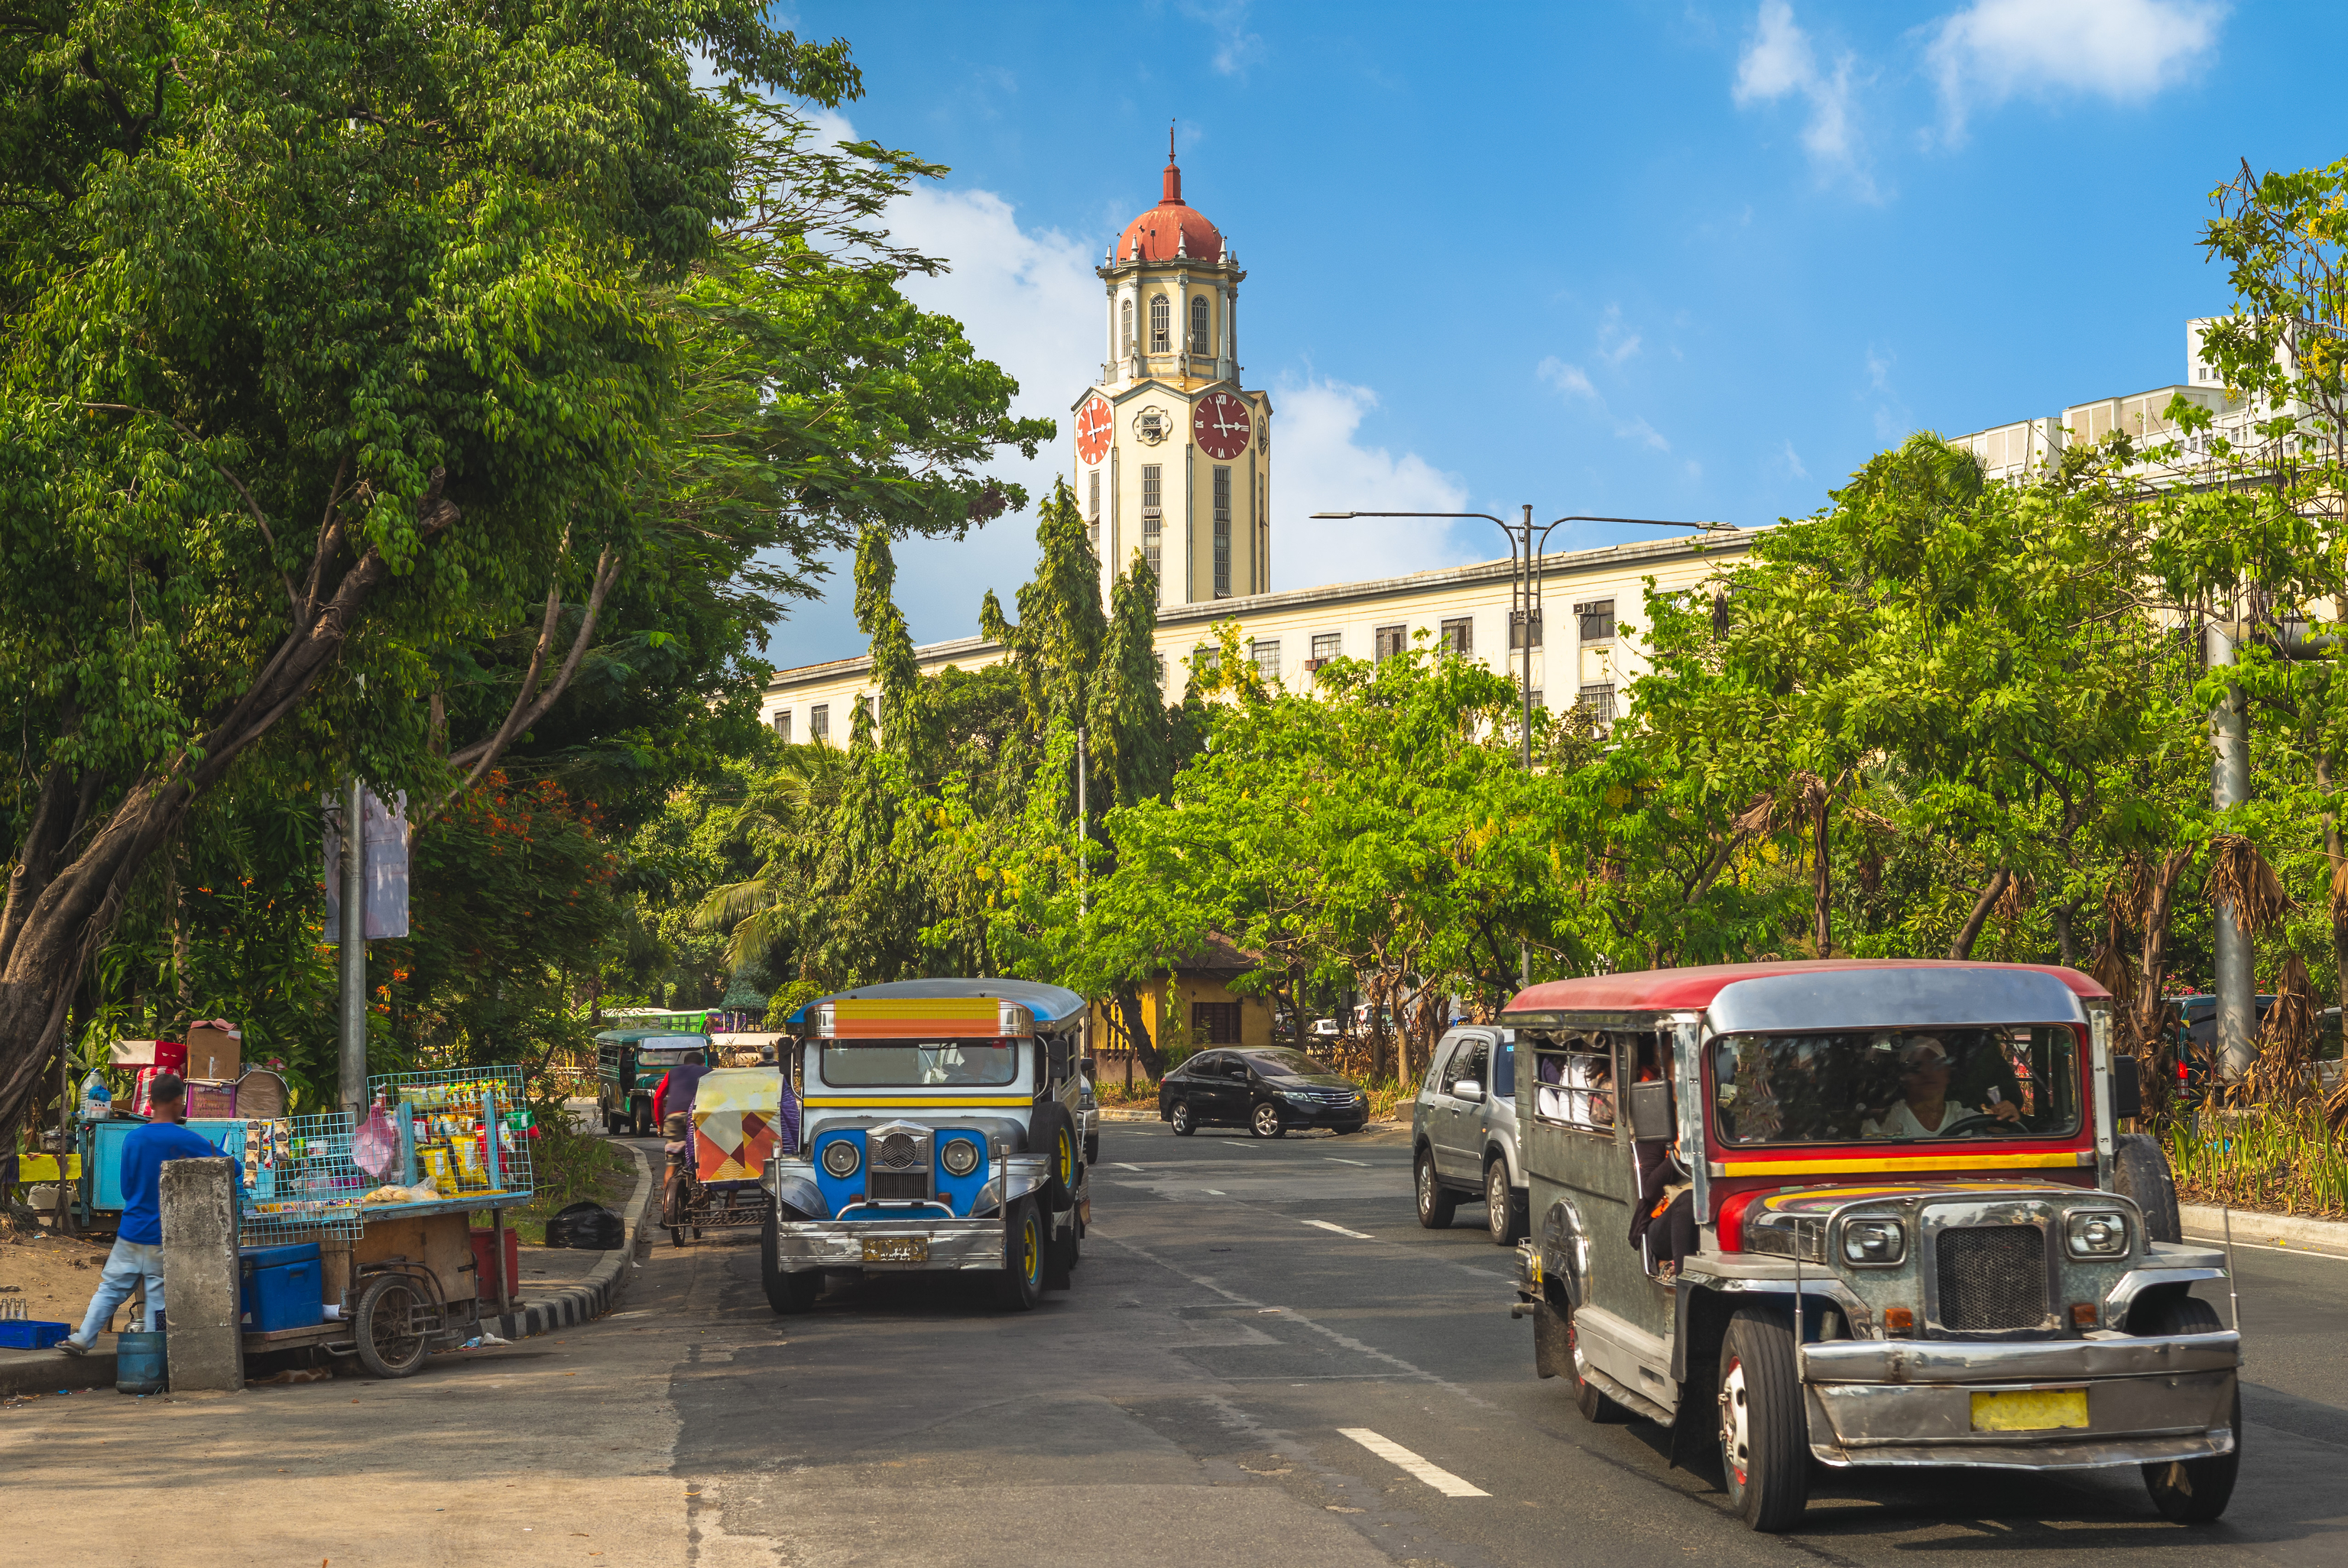 Calle de Manila con la Torre del Reloj al fondo.